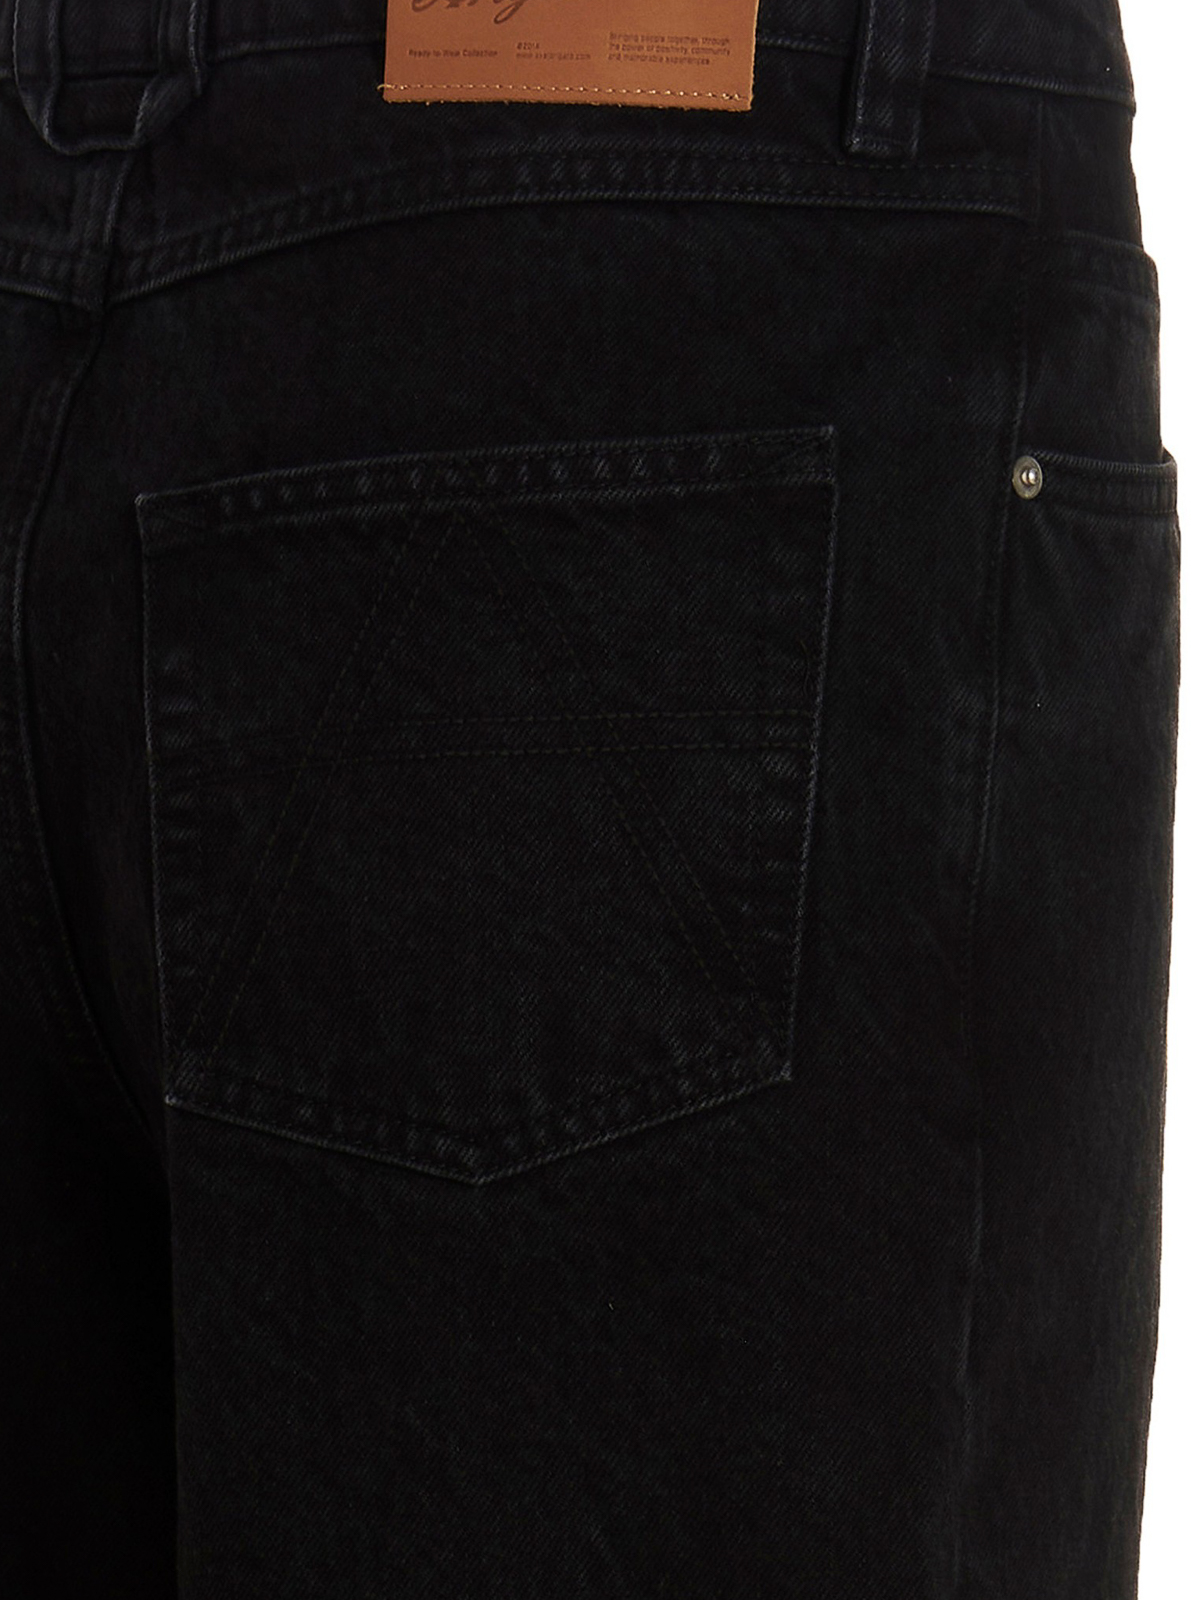 Laboratorium spoor bijvoeglijk naamwoord Flared jeans Axel Arigato - Inside jeans - A0865003FADEDBLACK | iKRIX.com